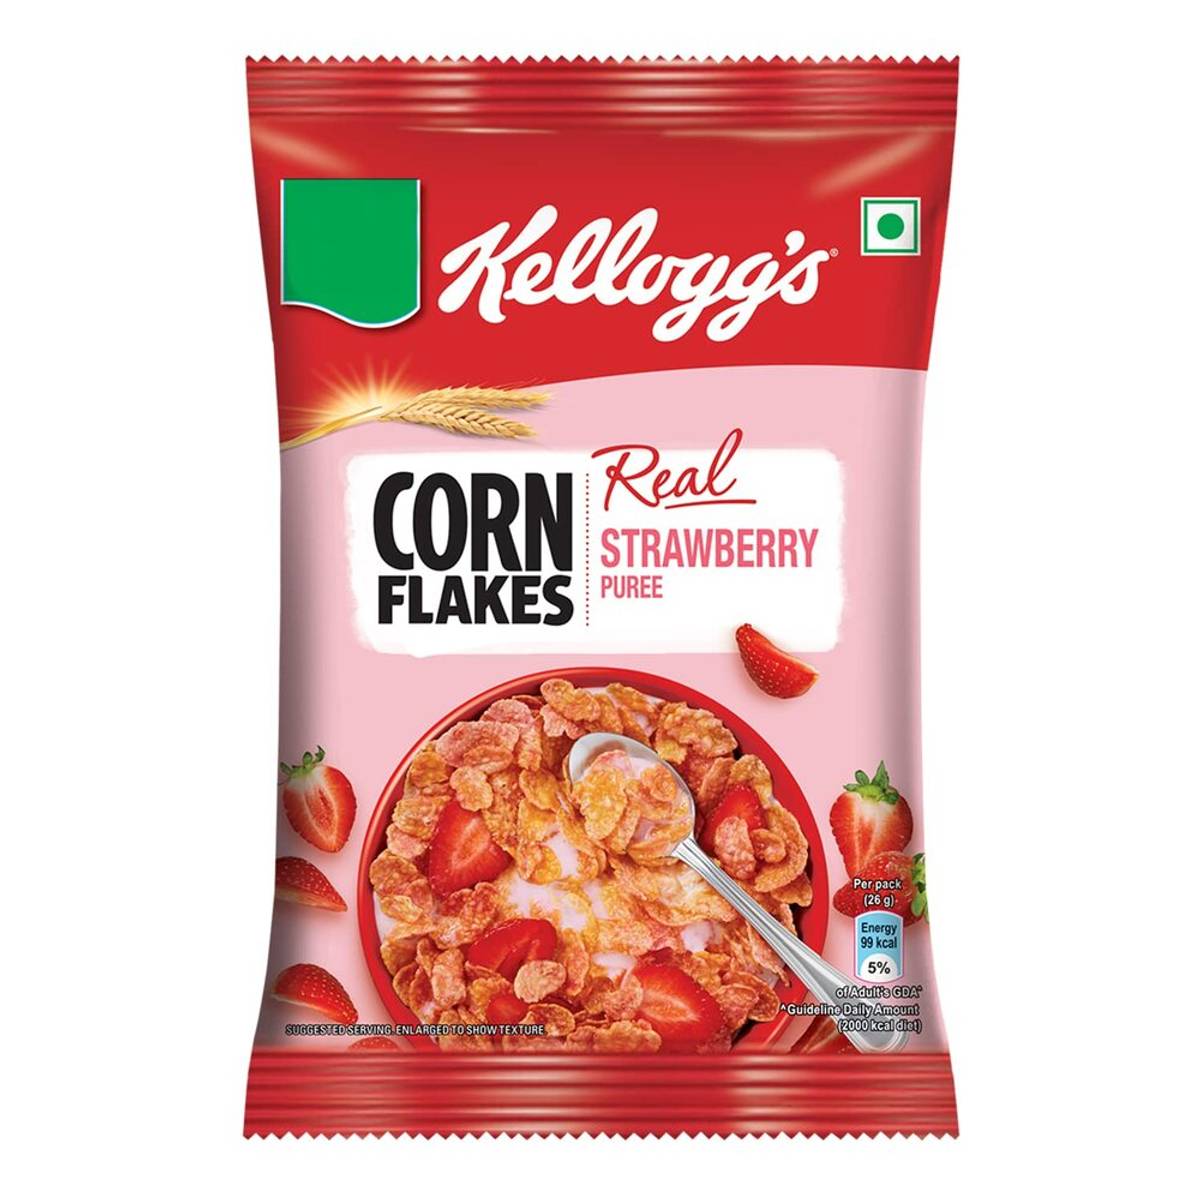 Kelloggs Corn Flakes Real Strawberry Puree,24g